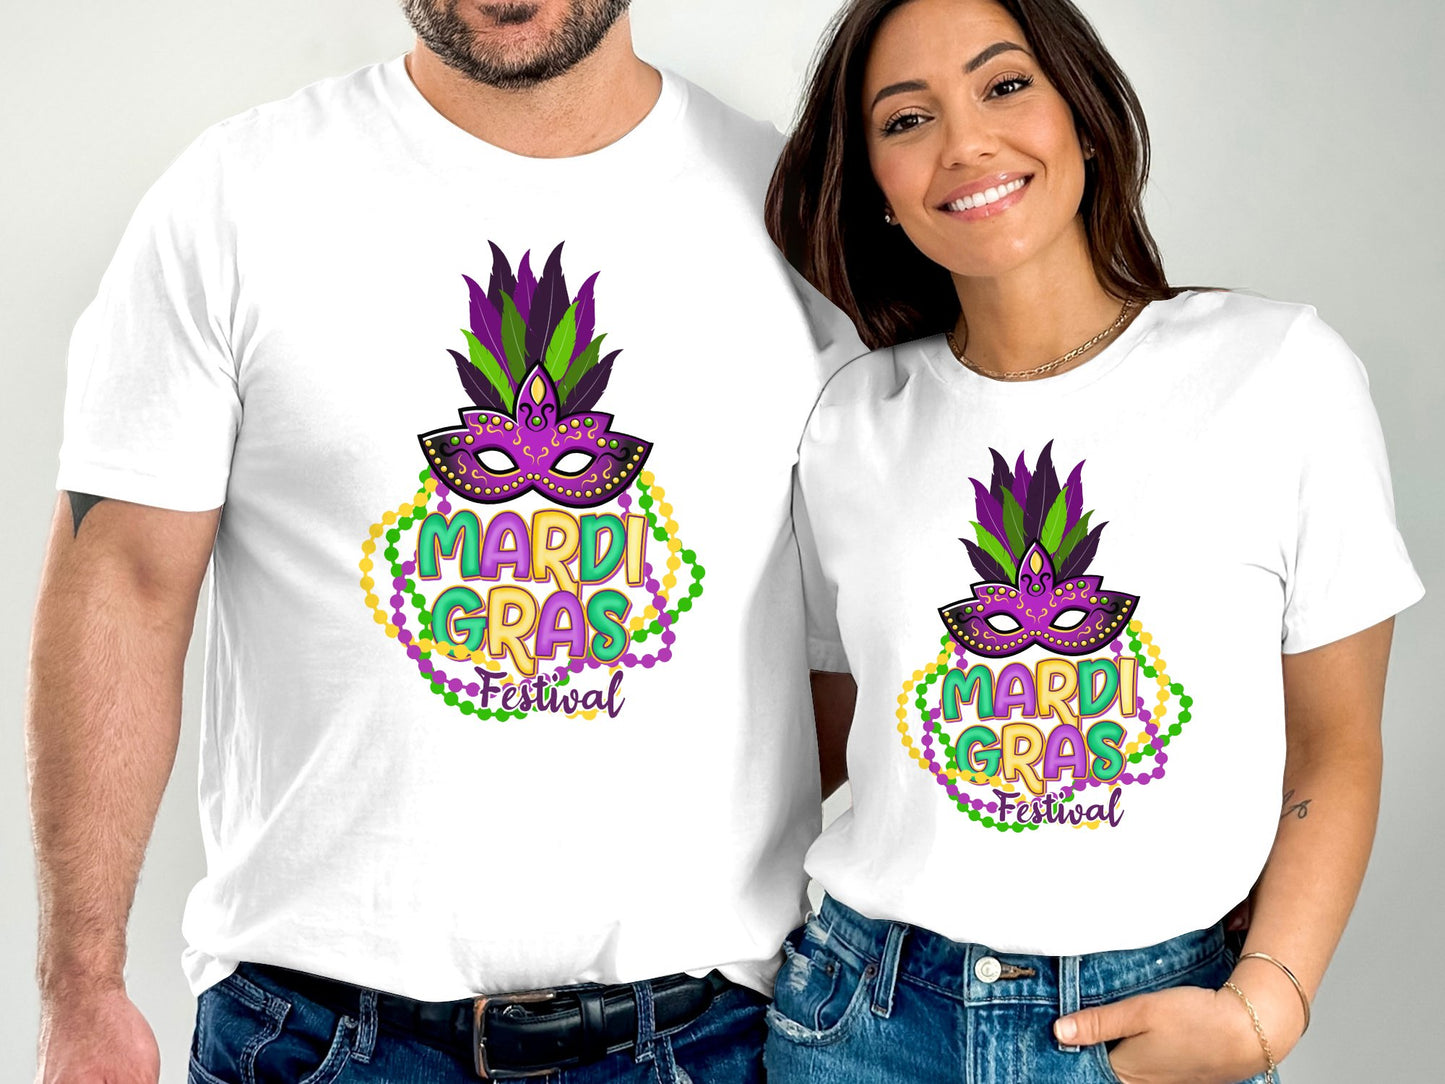 Mardi Gras Festival t-shirt